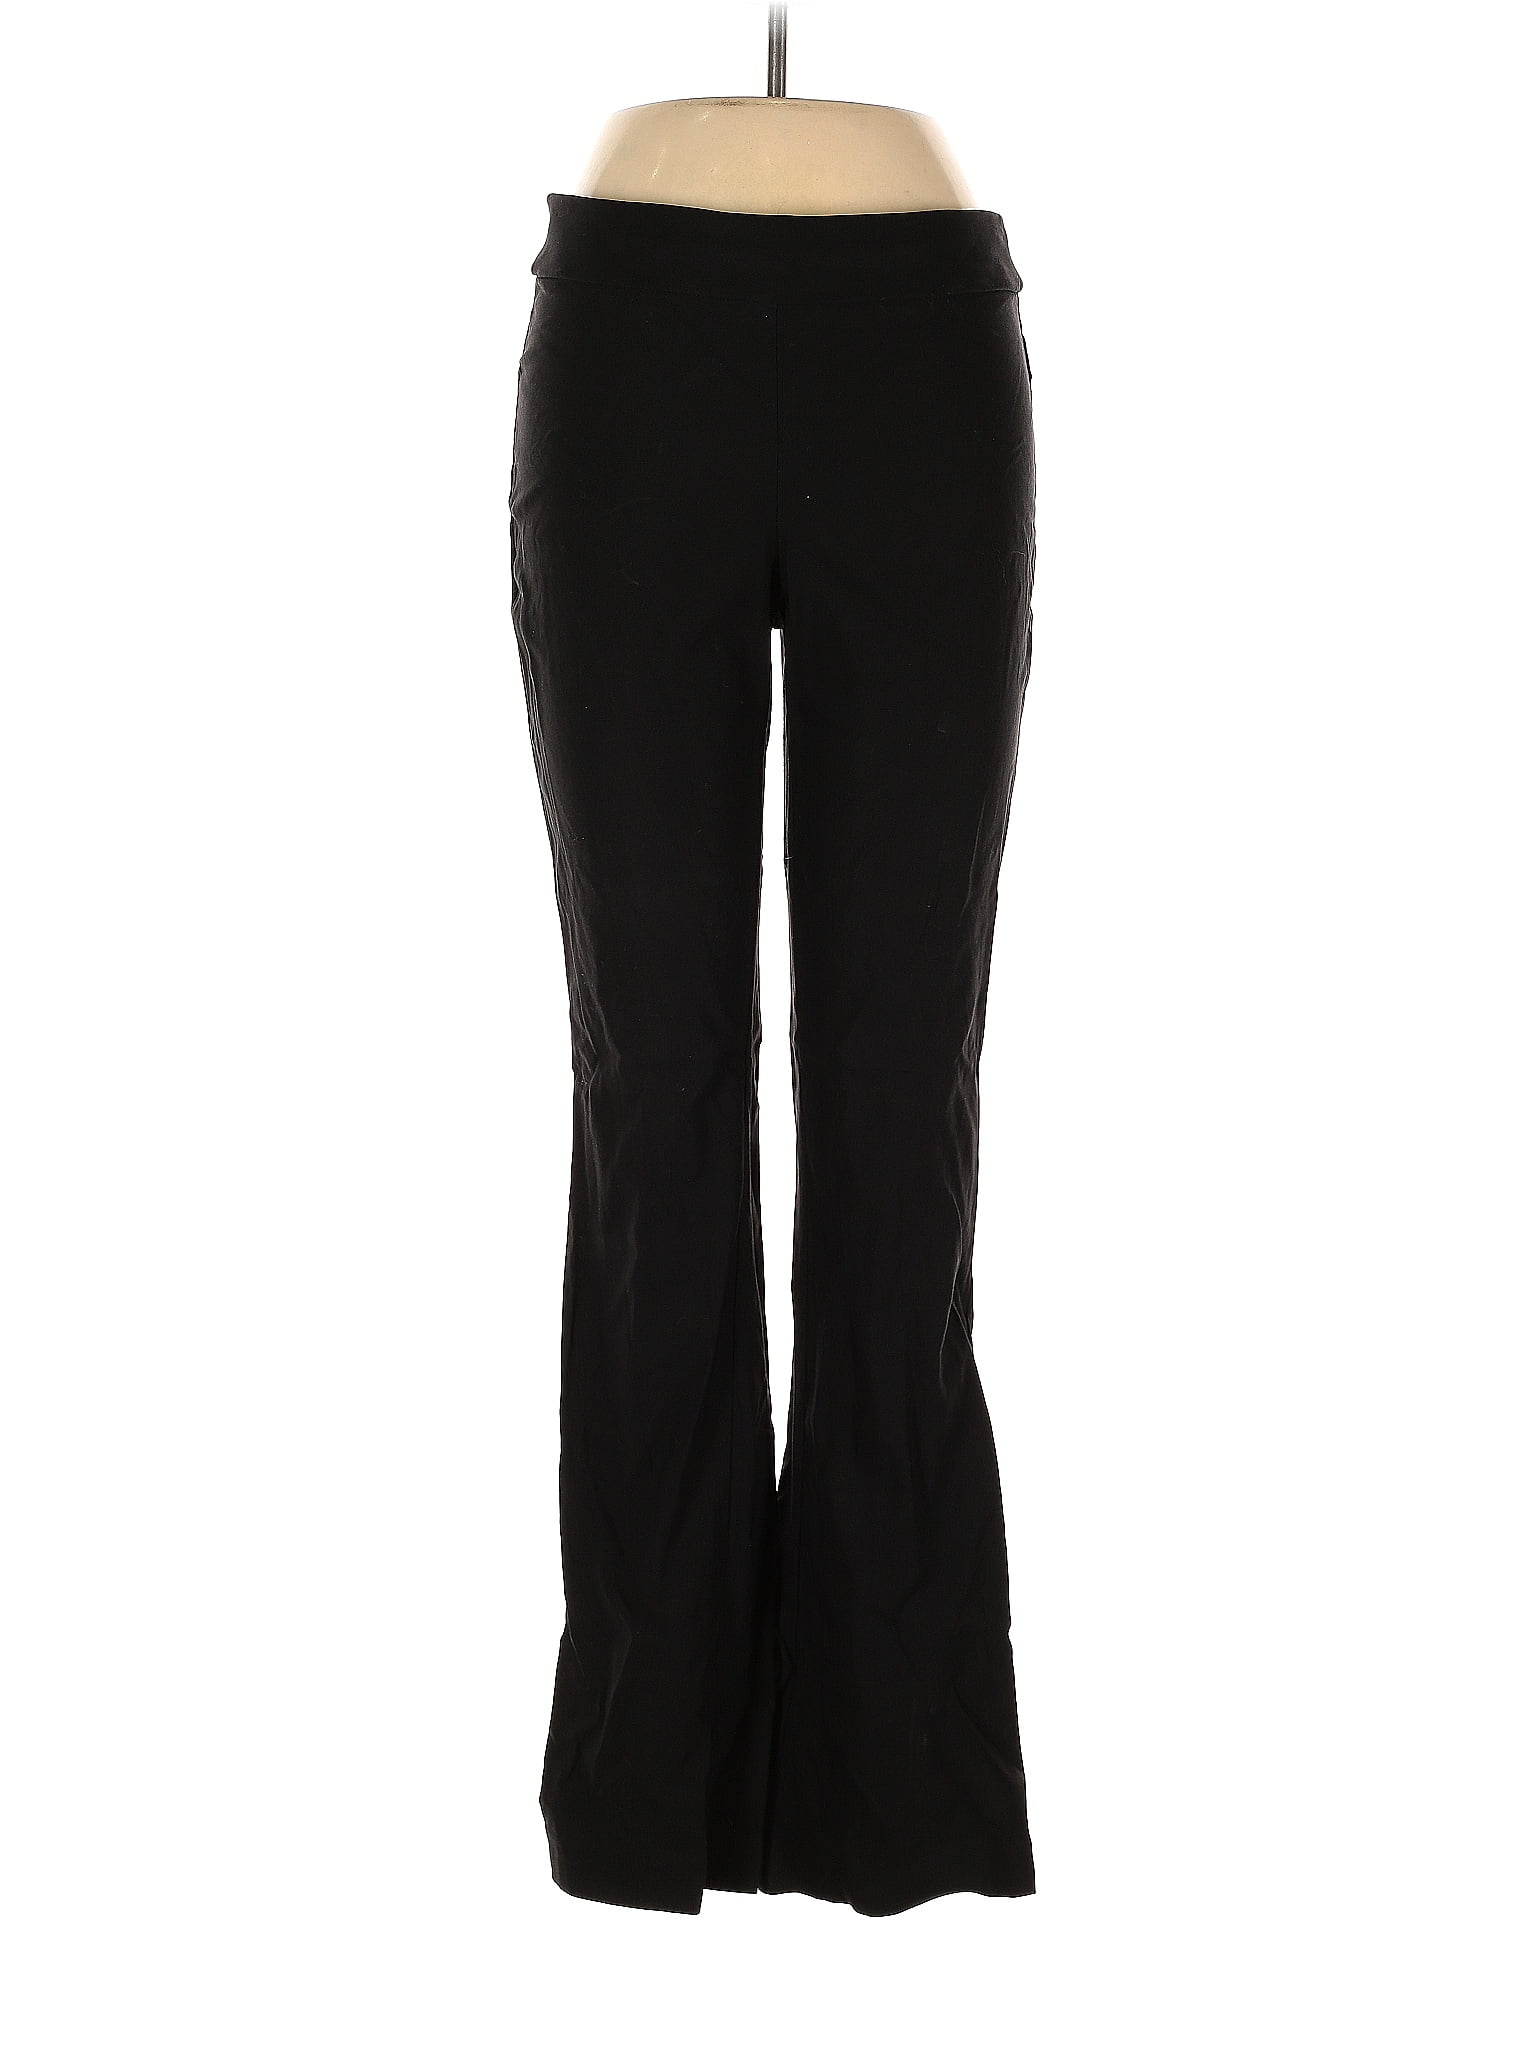 Simply Vera Vera Wang Black Casual Pants Size M - 54% off | thredUP